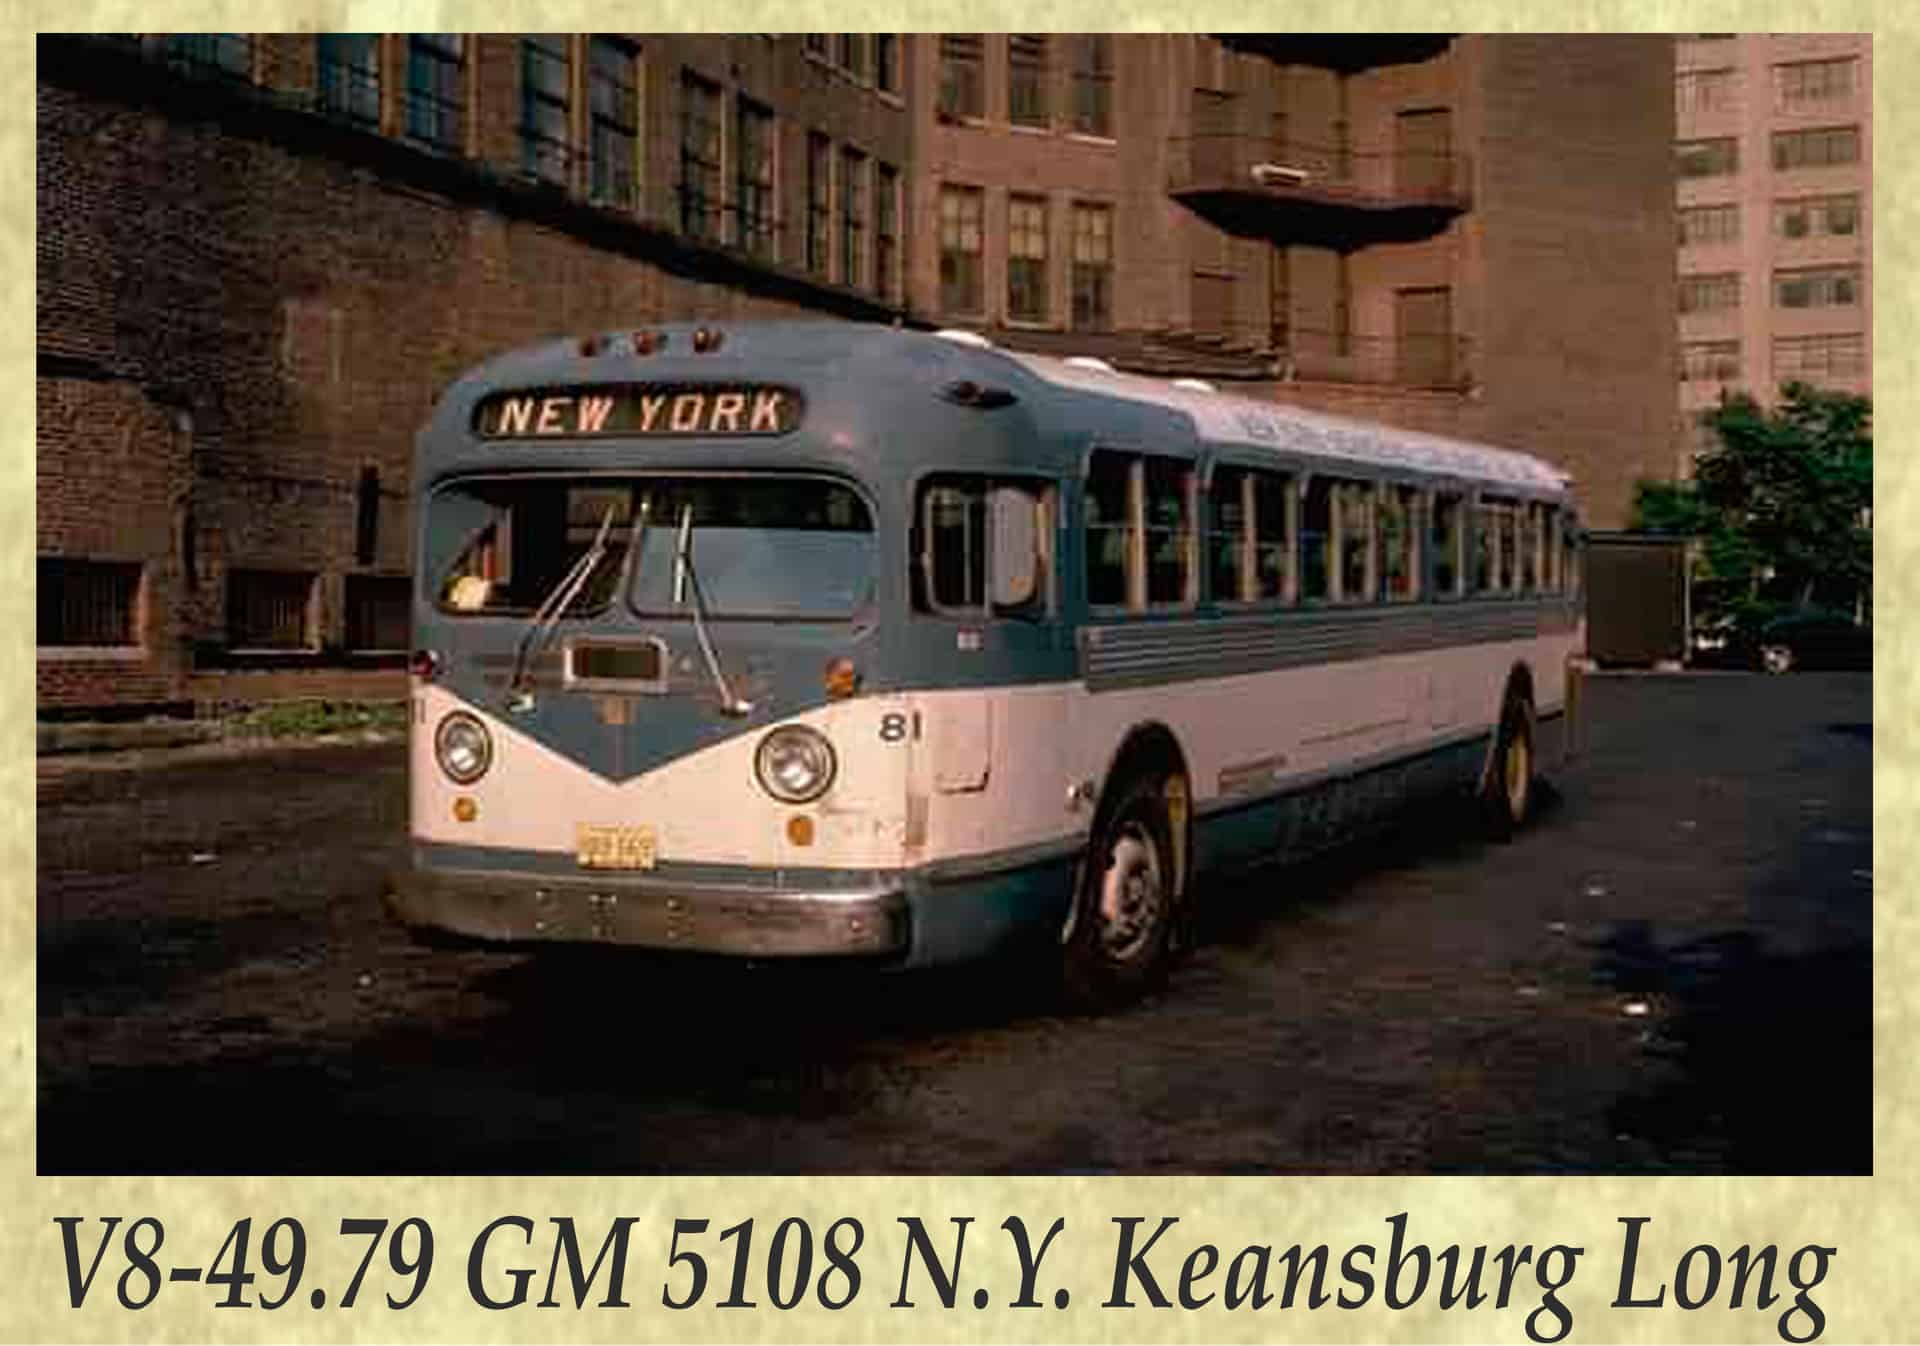 V8-49.79 GM 5108 N.Y. Keansburg Long